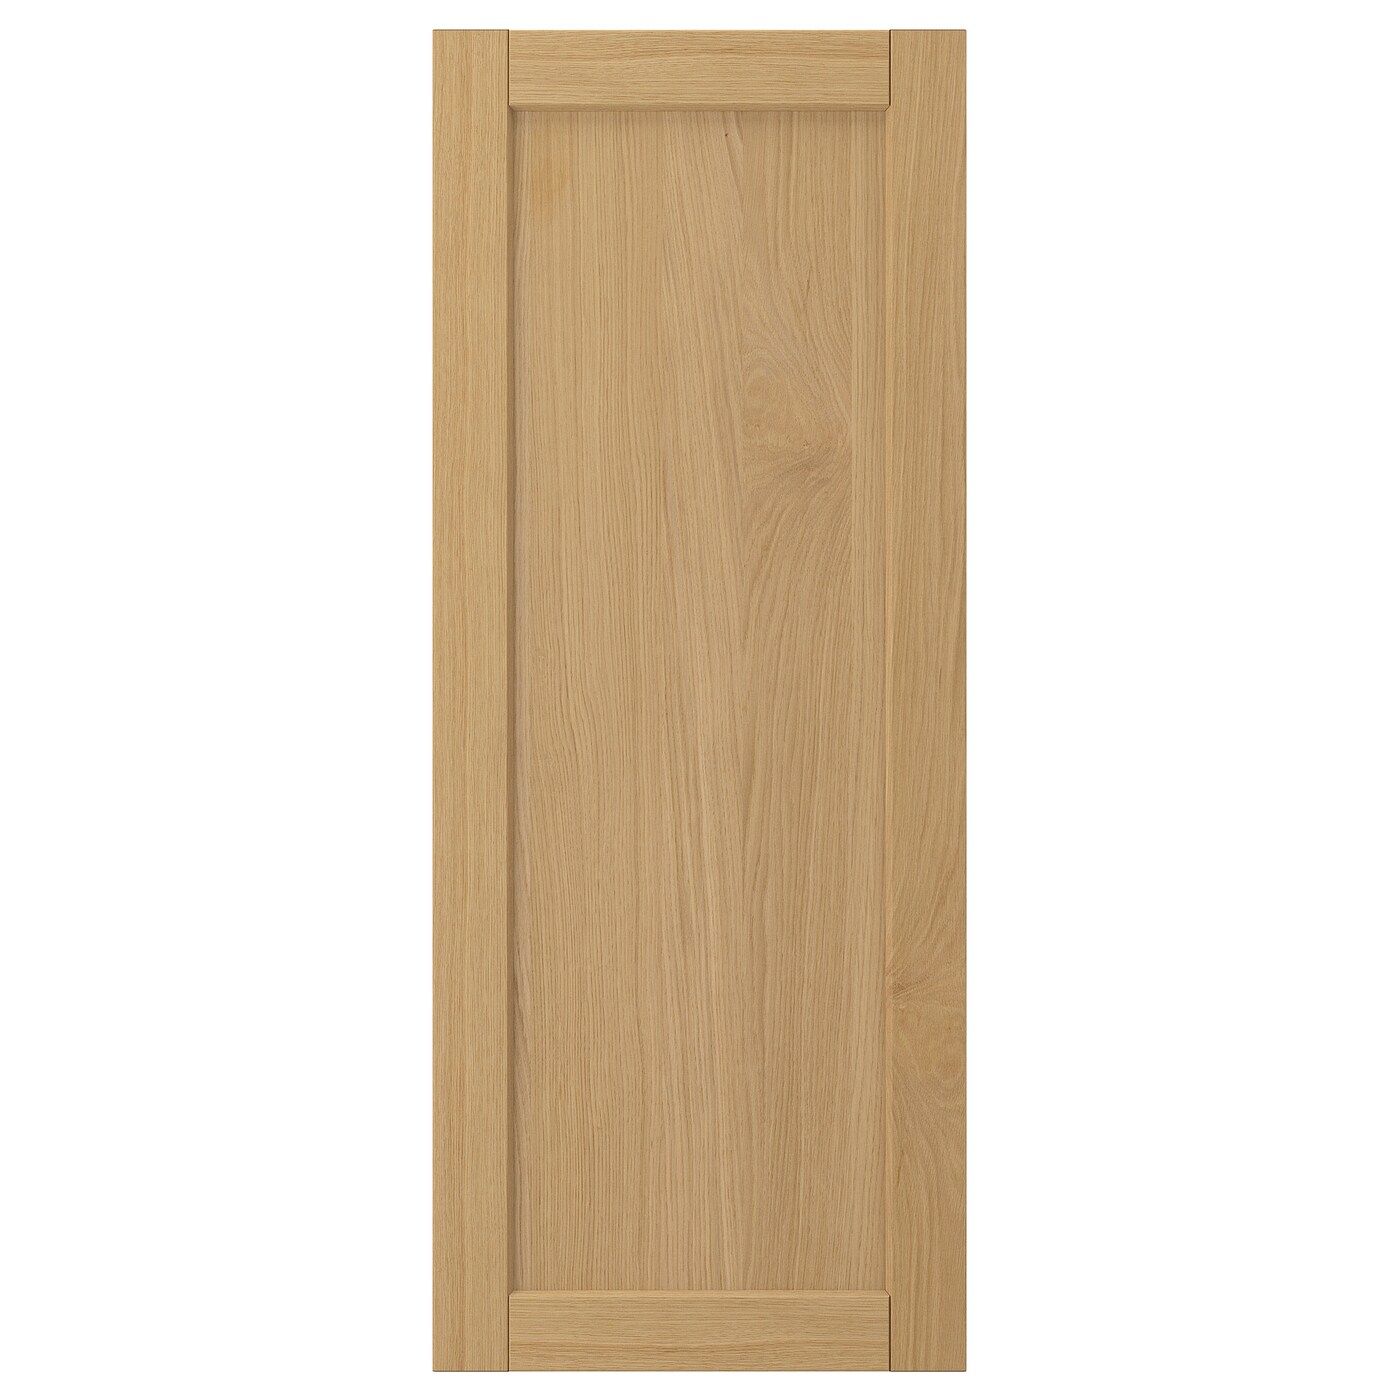 Дверца - FORSBACKA IKEA/ ФОРСБАКА ИКЕА,  100х40 см, под беленый дуб